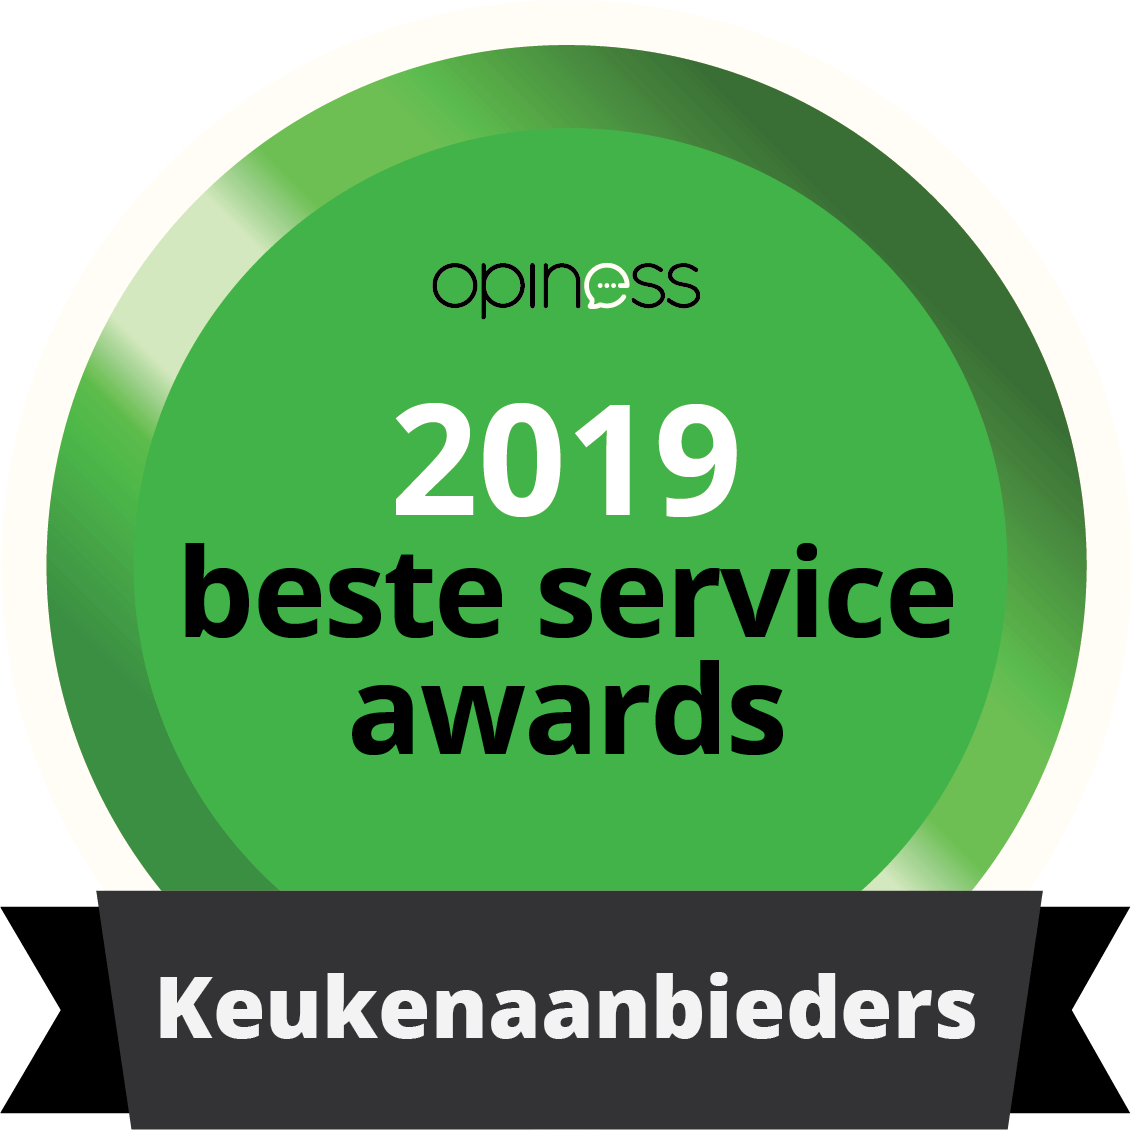 Tieleman Keukens Beste Service Awards 2019 winnaar